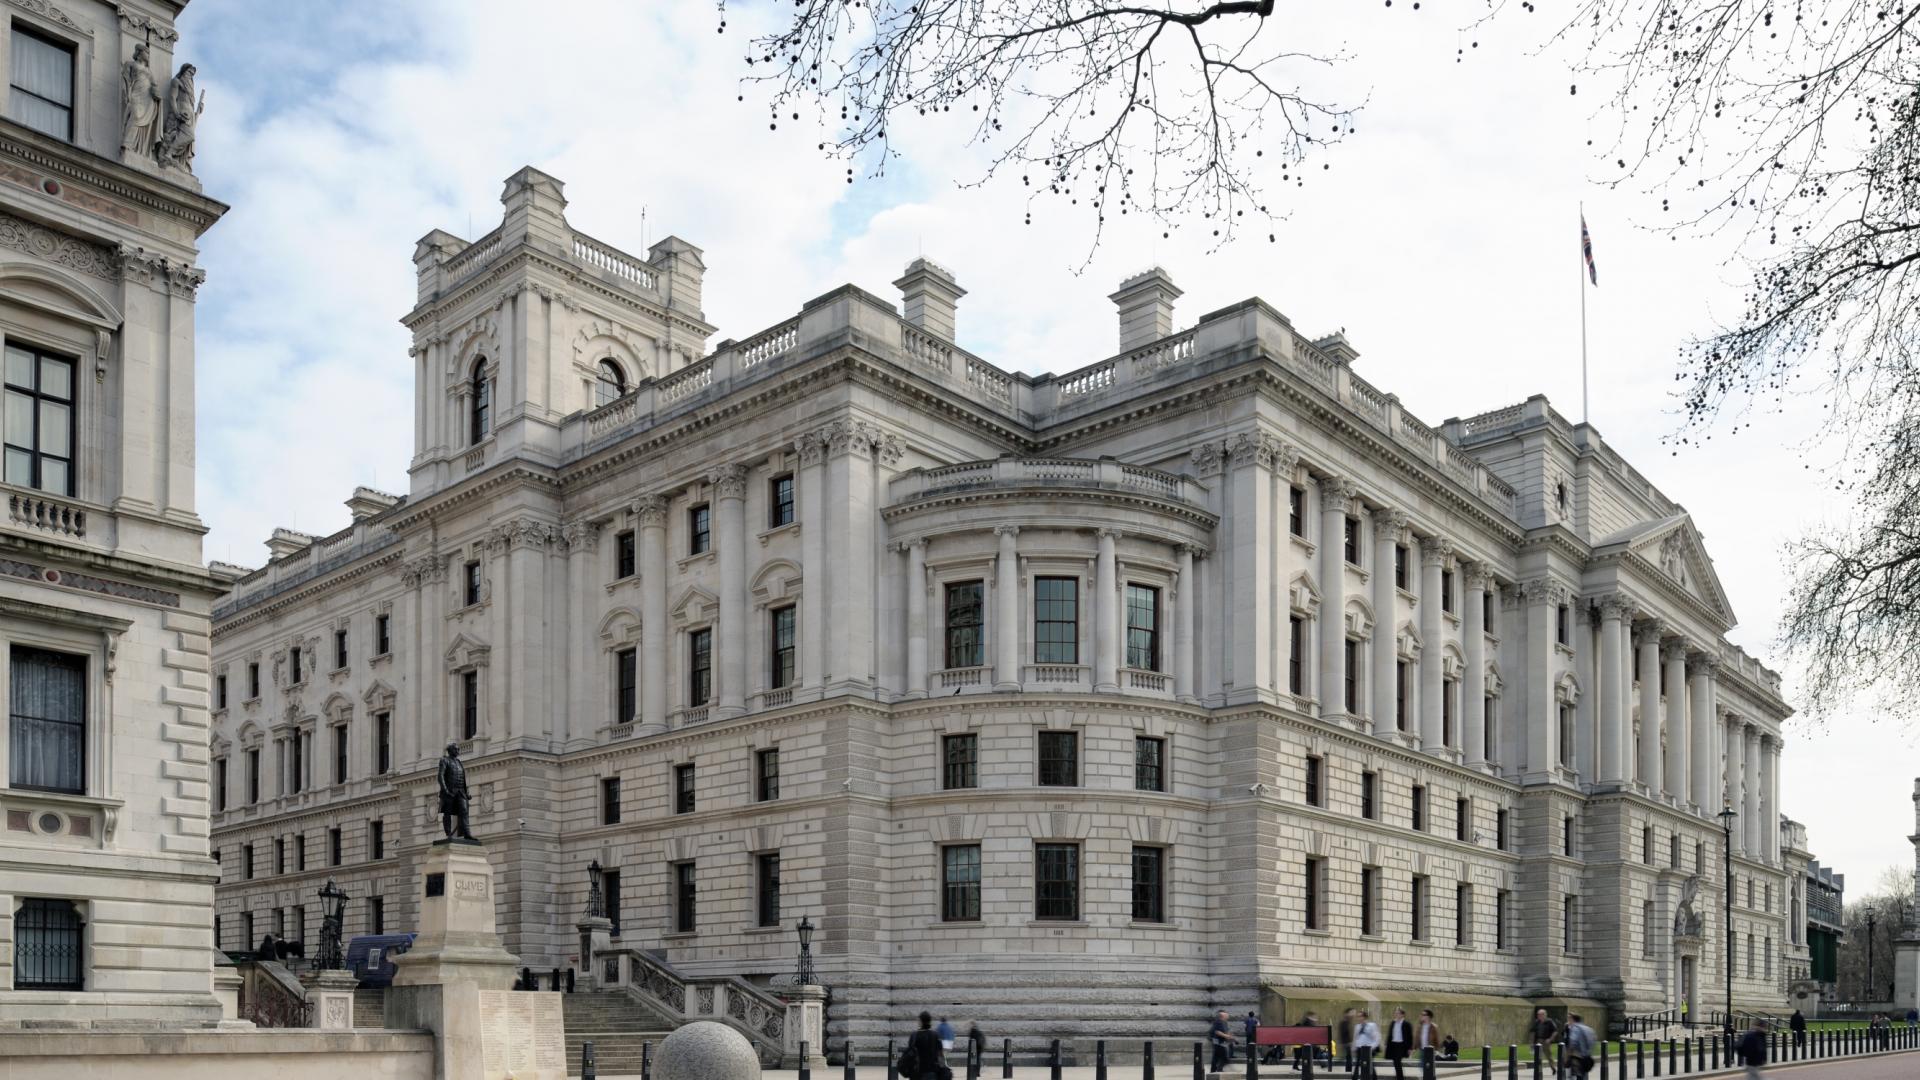 Image of the HM Treasury building